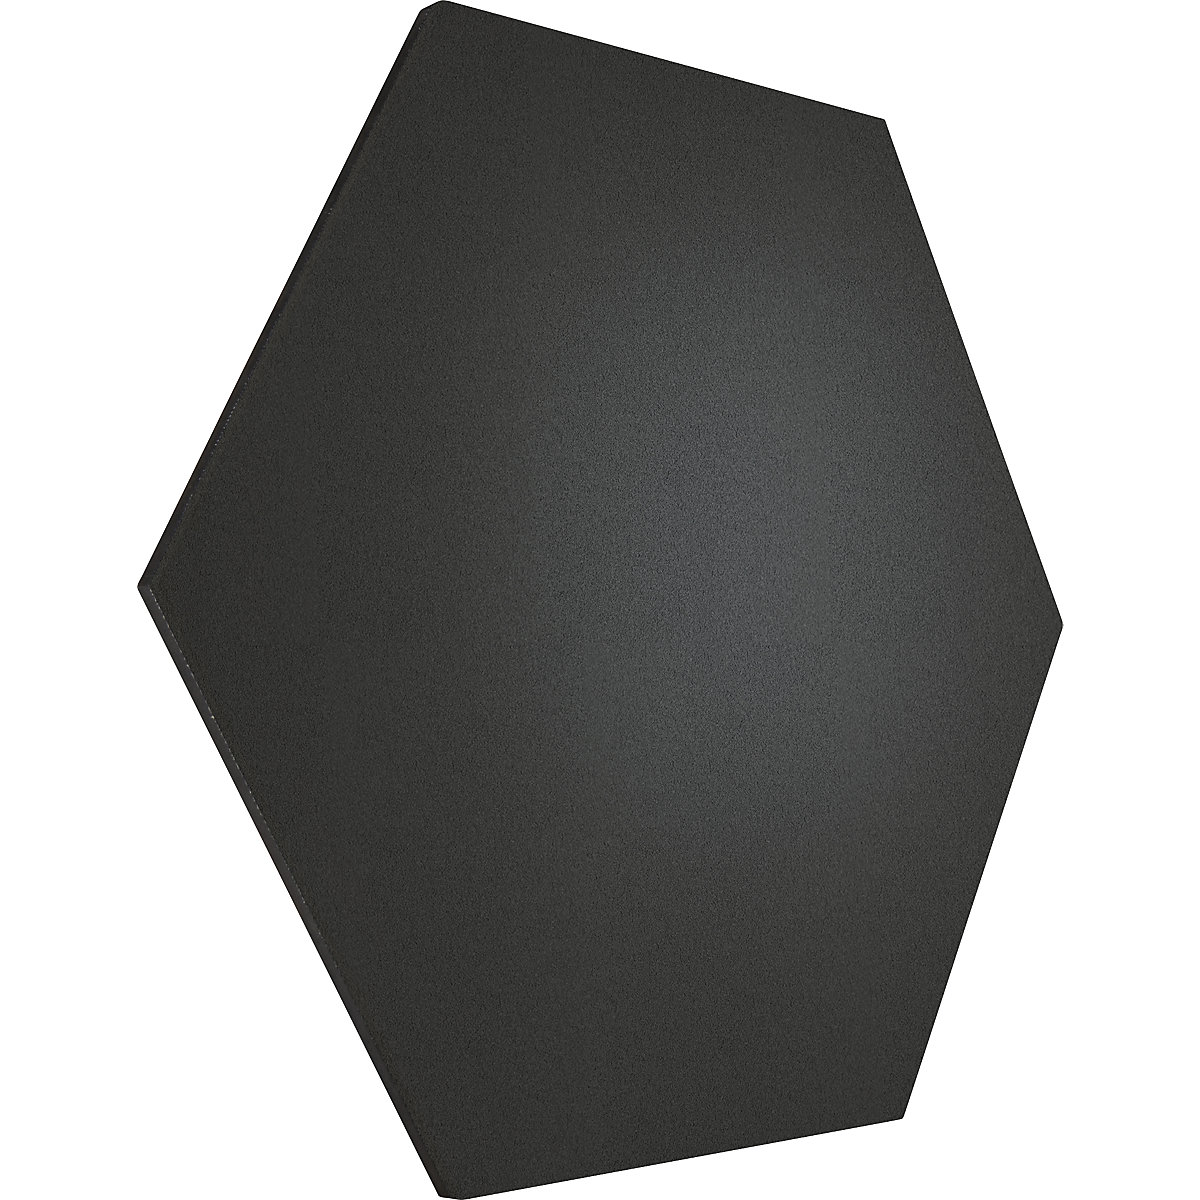 Elegantna oglasna deska, šesterokotna – Chameleon, pluta, ŠxV 600 x 600 mm, črne barve-27